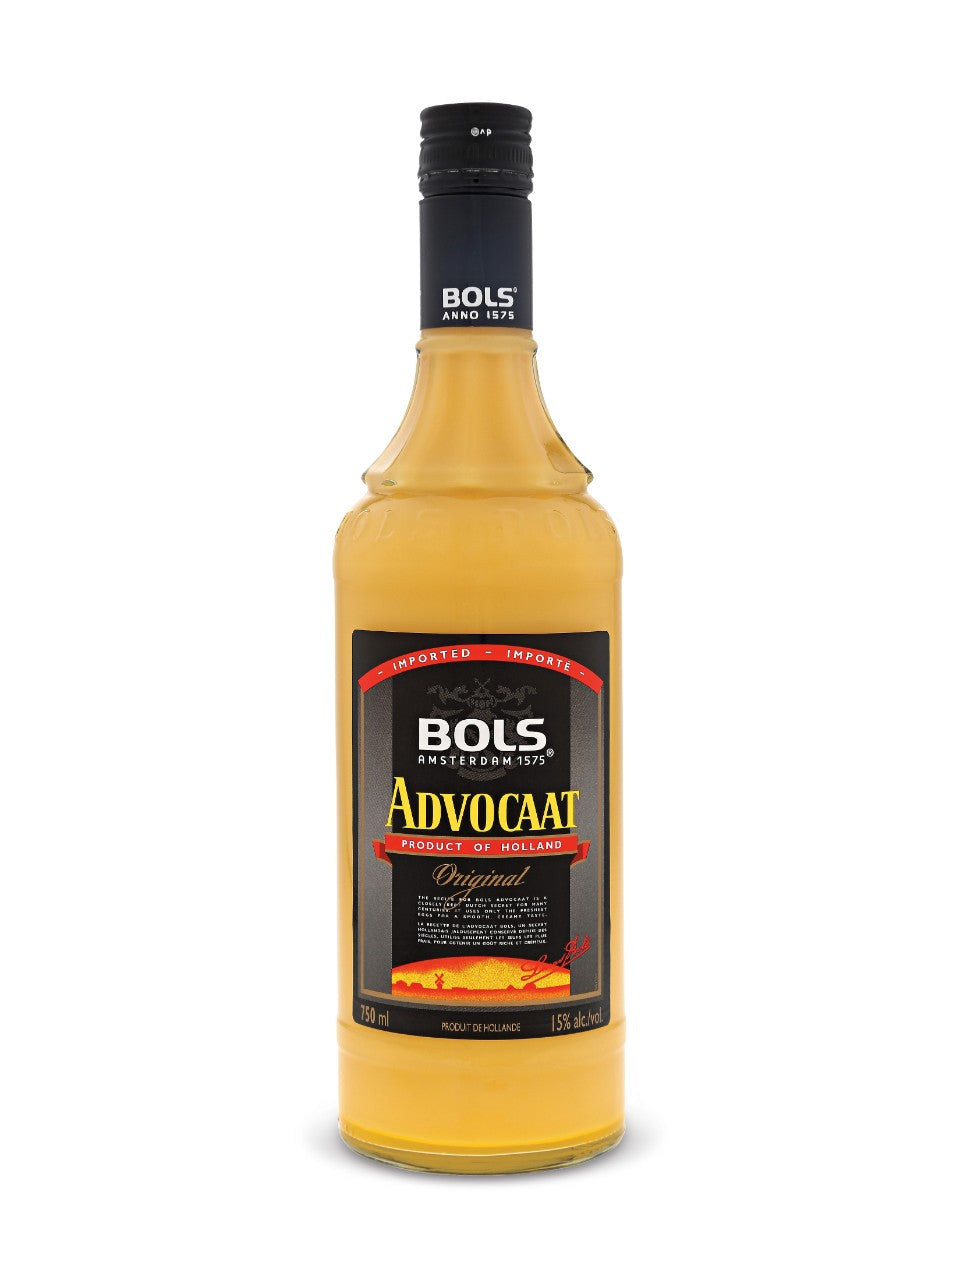 Bols Advocaat 750 mL bottle